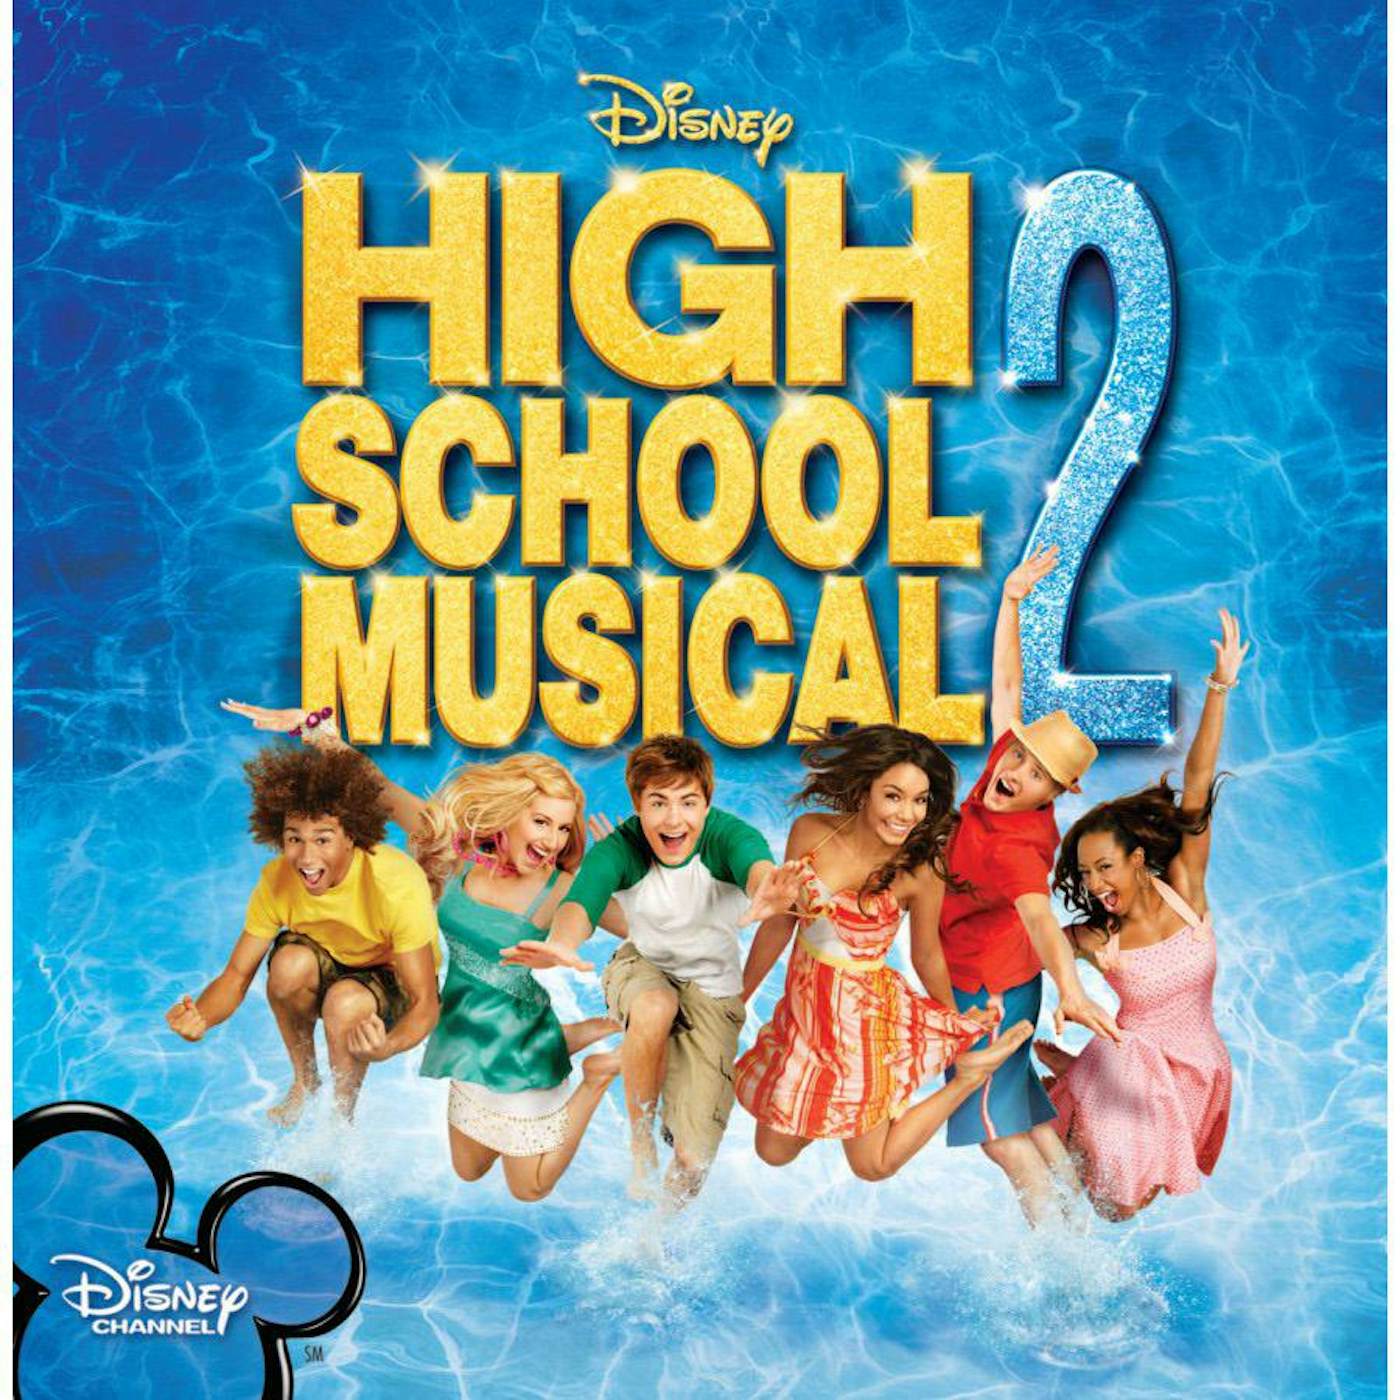 High School Musical 2 / O.S.T. High School Musical 2 / Original Soundtrack (Limited/Blue) Vinyl Record